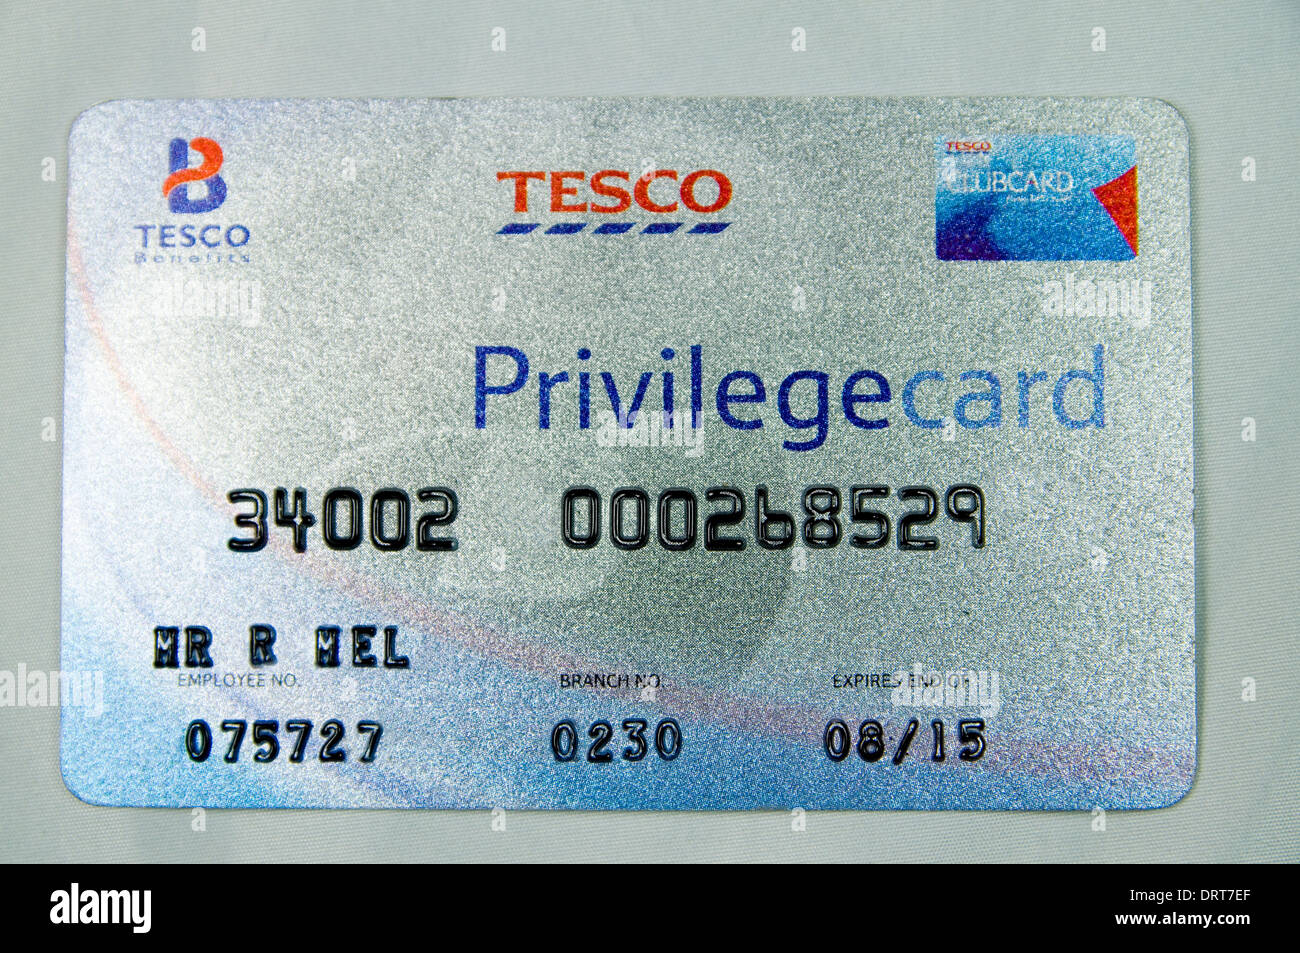 Tesco Privilege card, staff discount card. Stock Photo